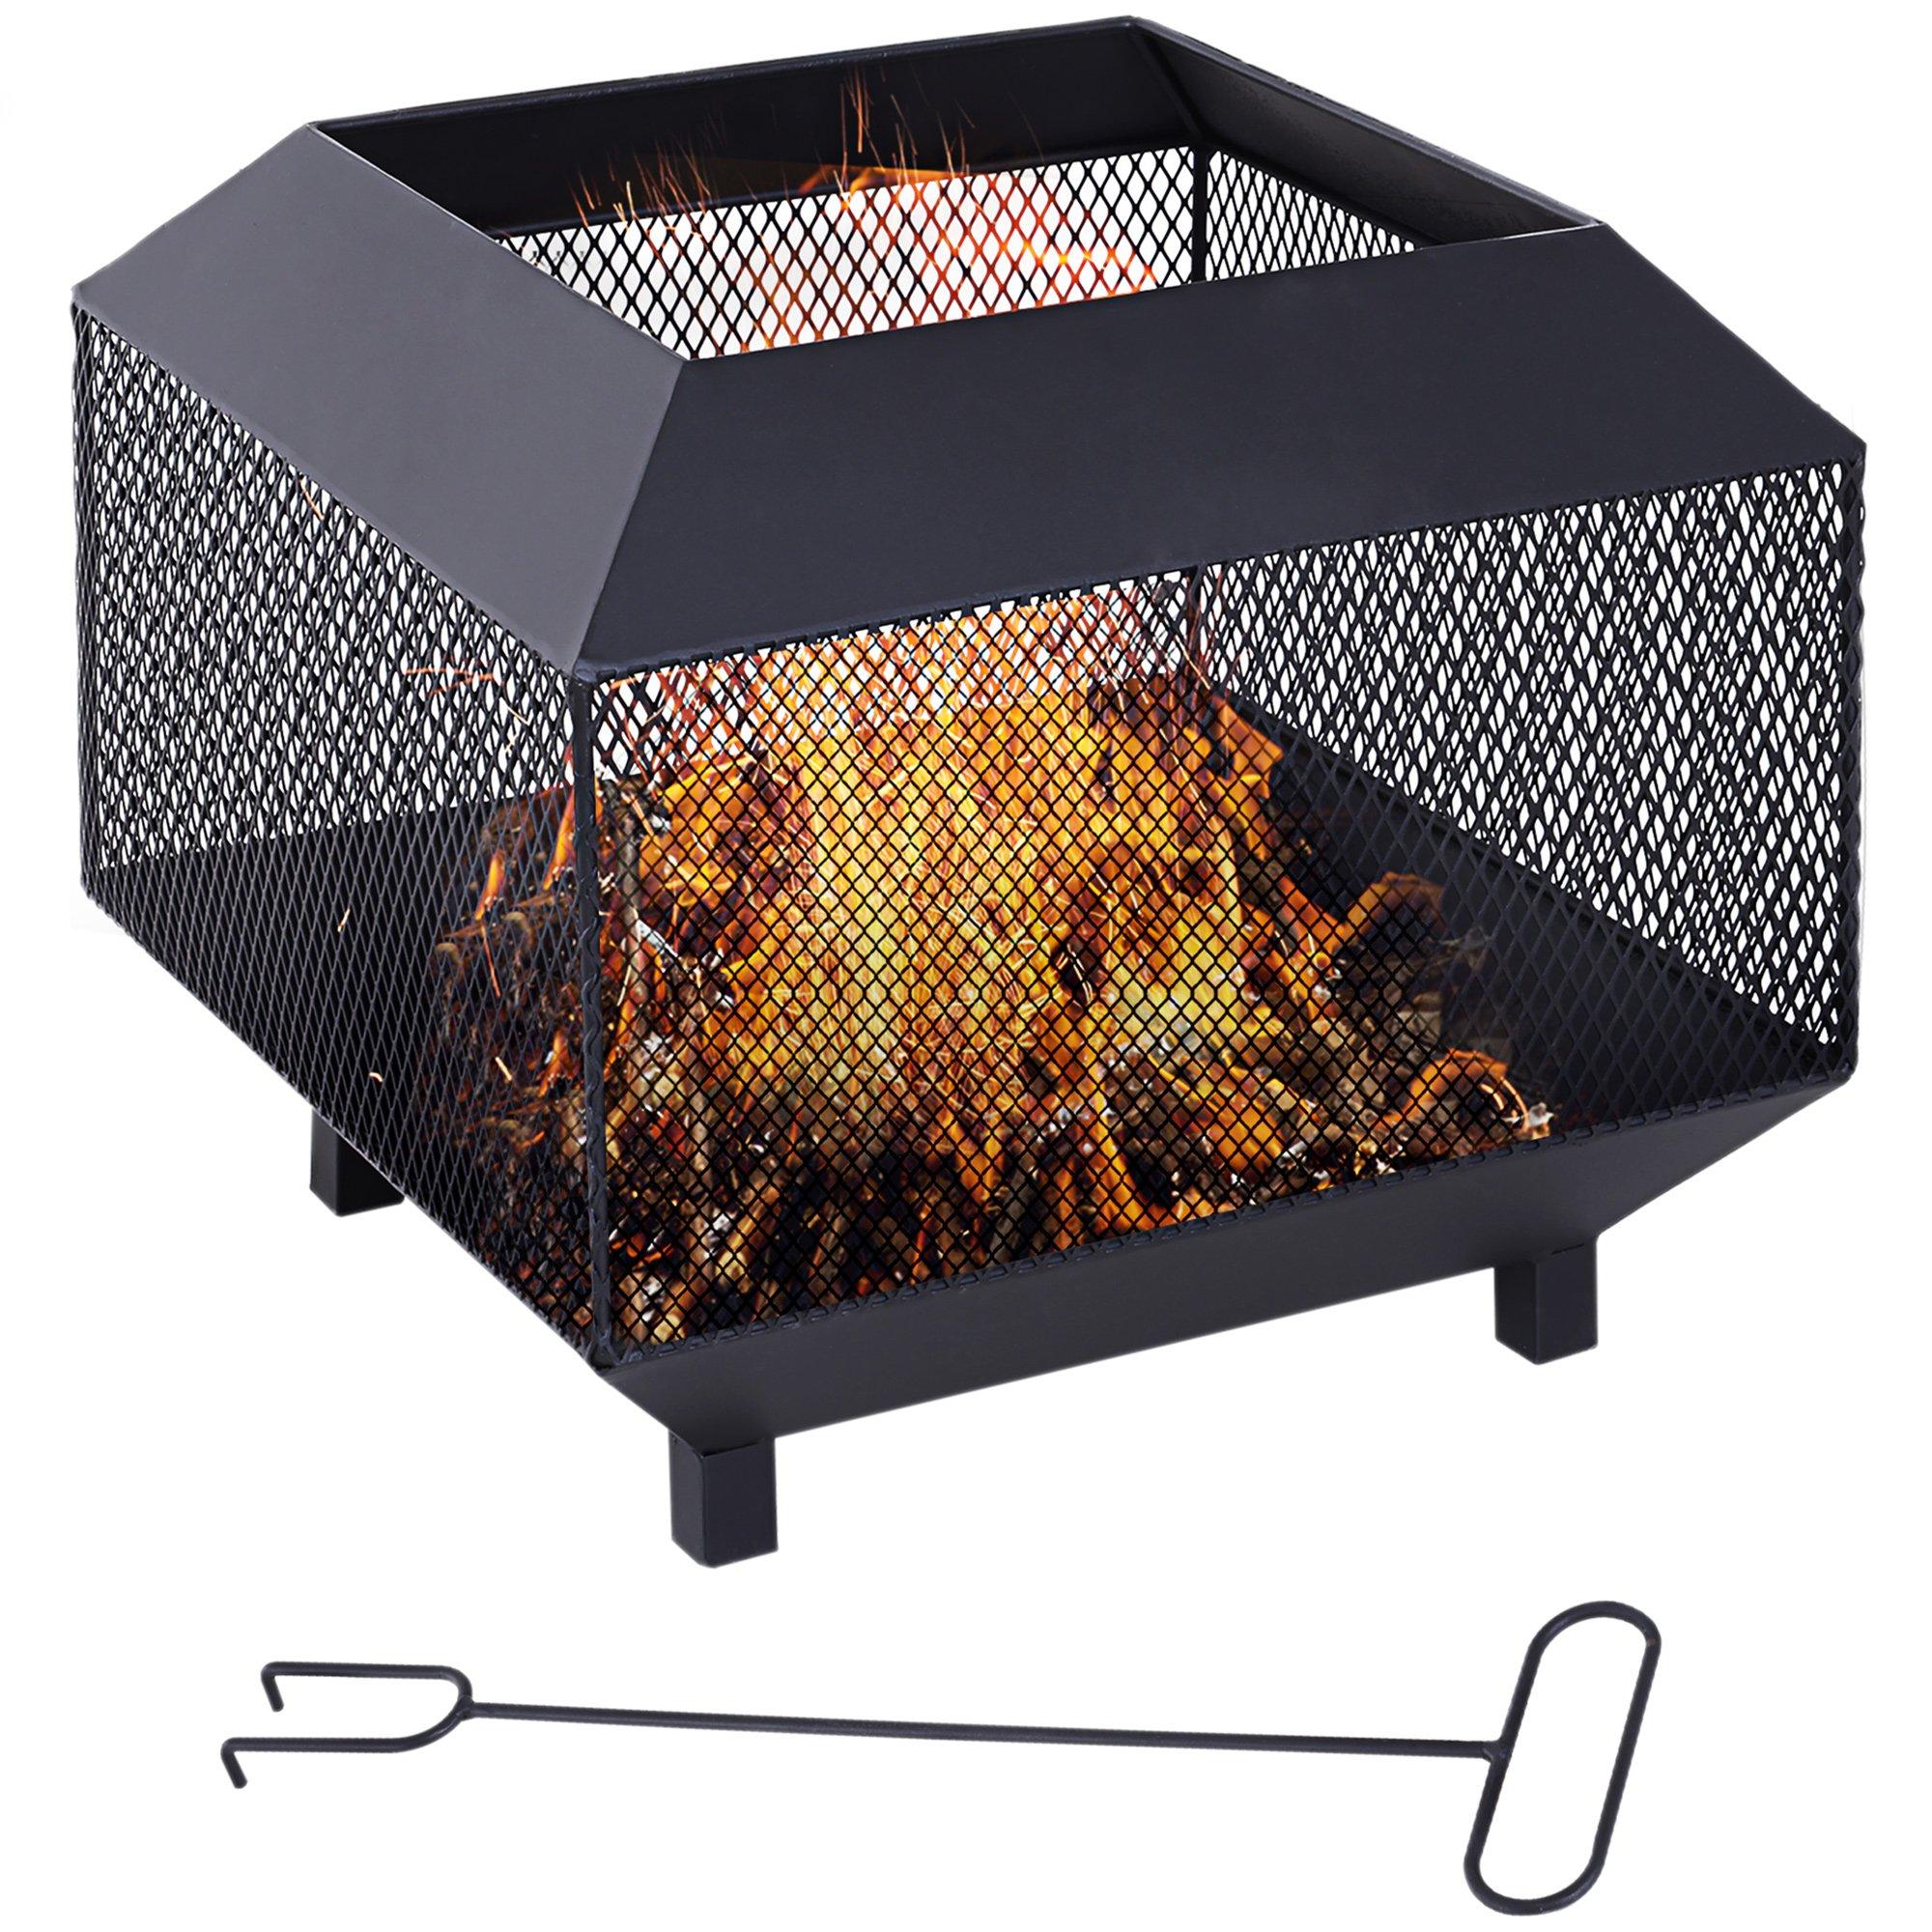 Metal Firepit Patio Heater Brazier Garden Square Stove Log Burner